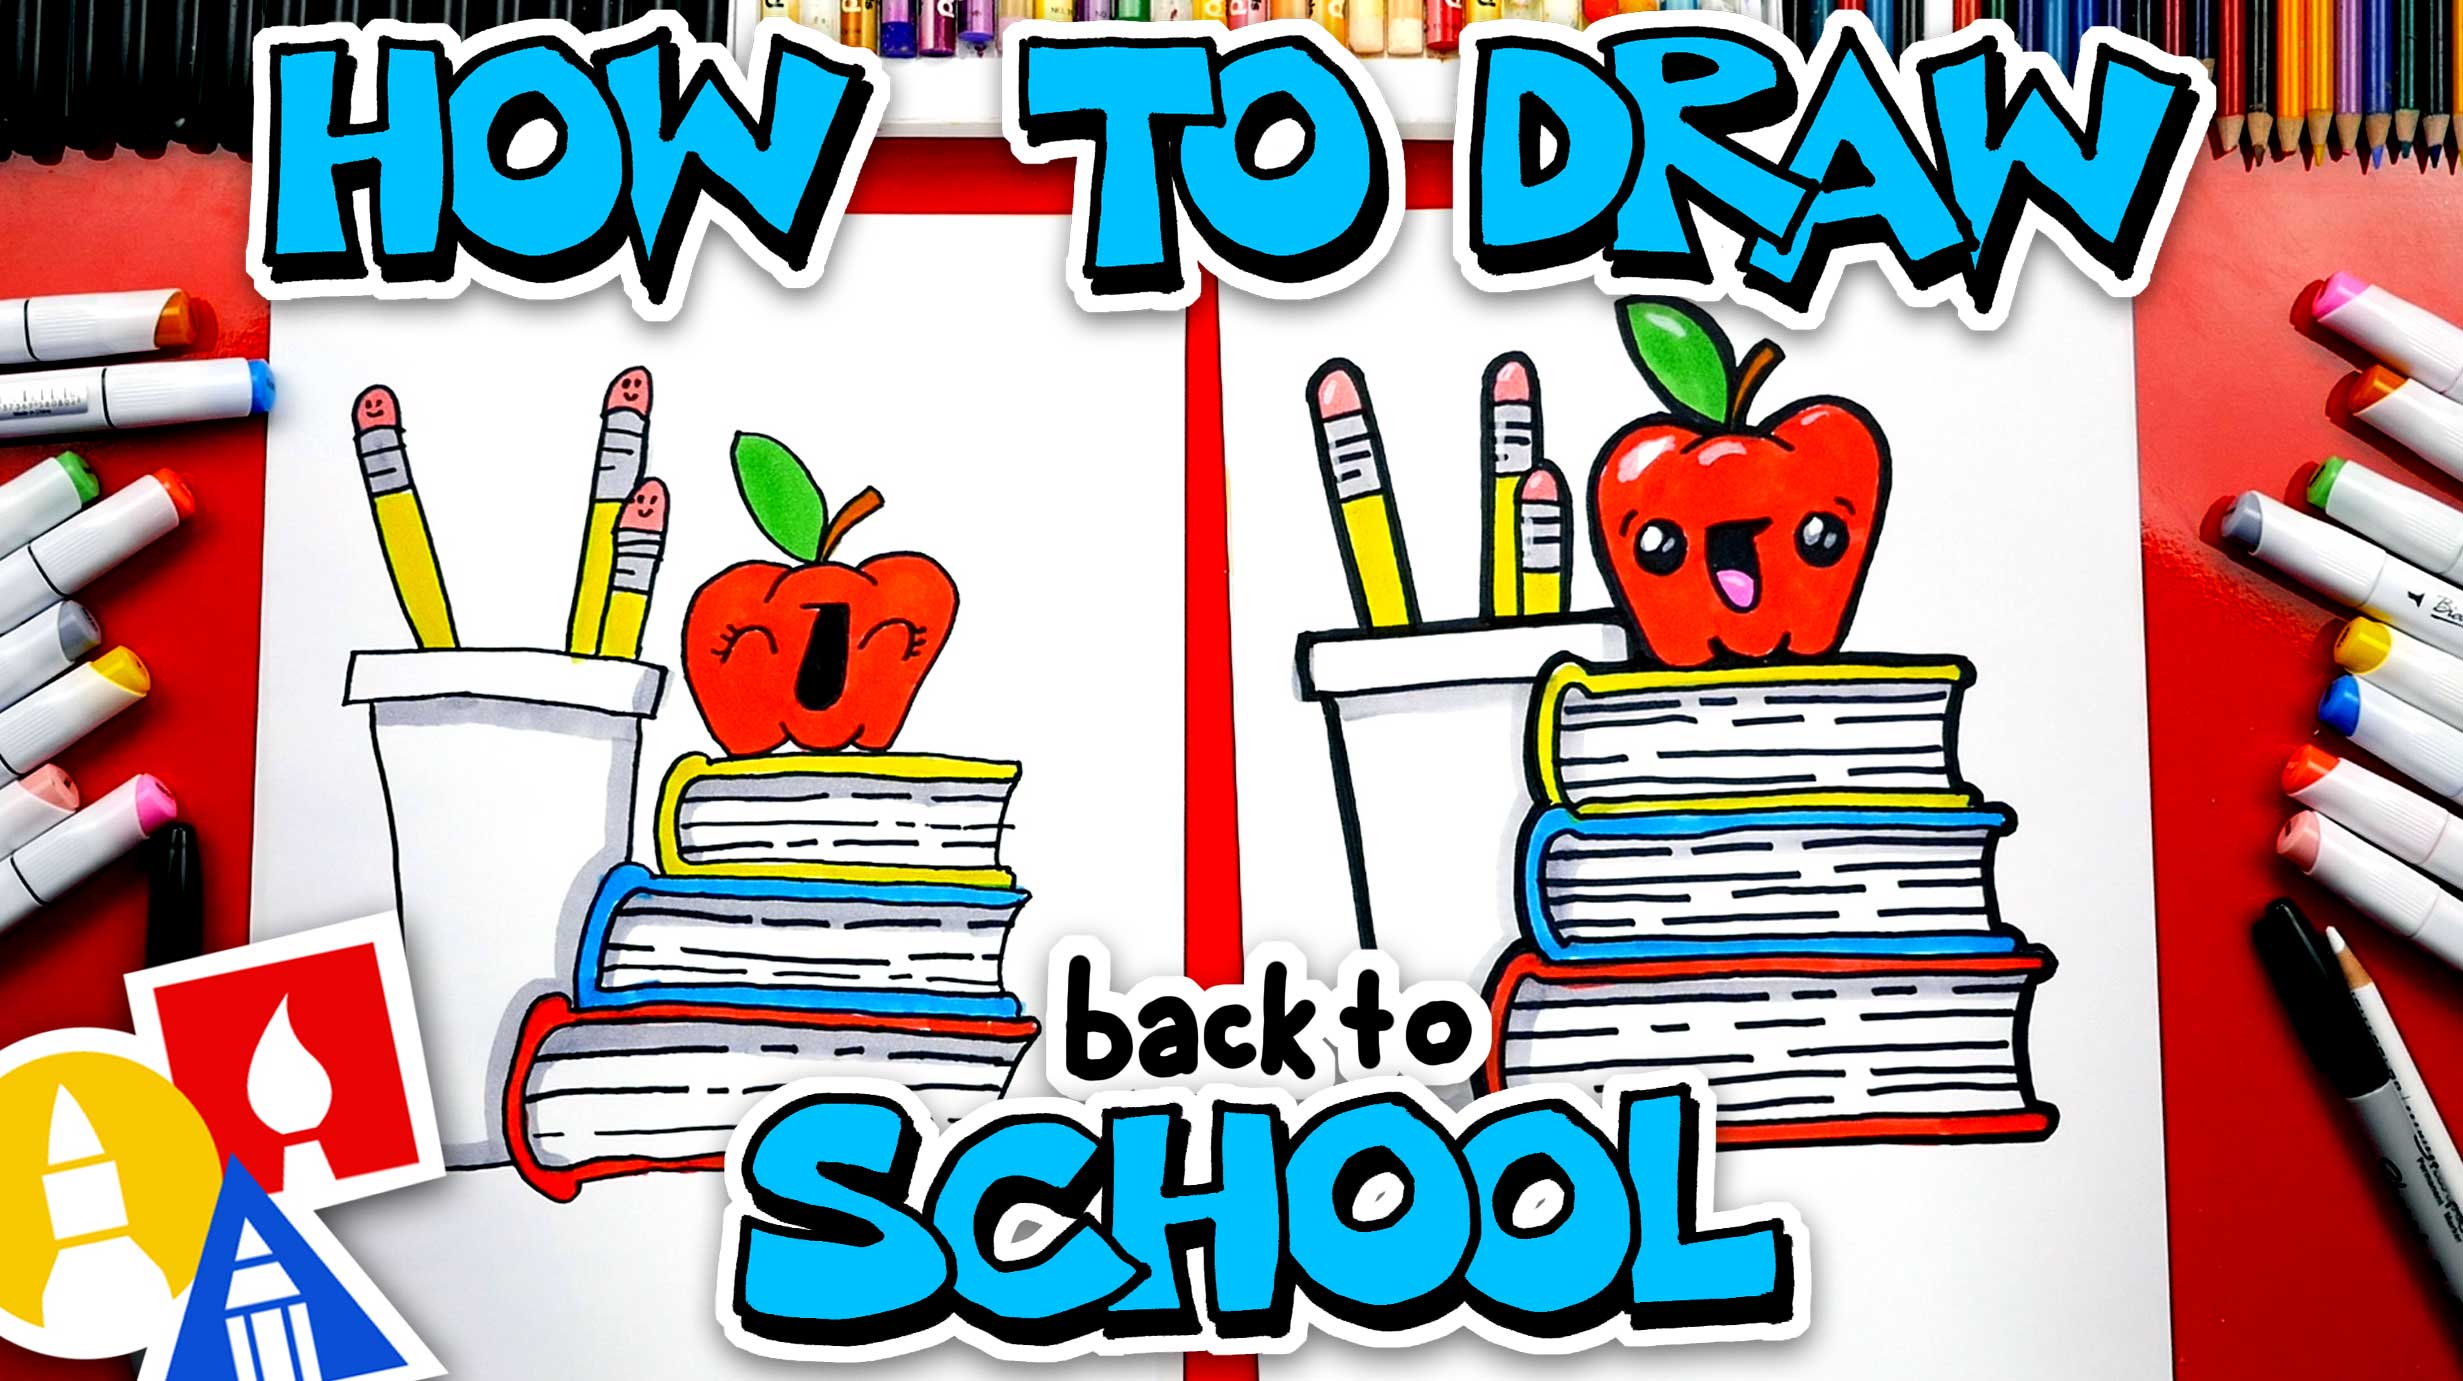 School Drawing Guide - How to Draw a School Easy | Drawing school, School,  Draw